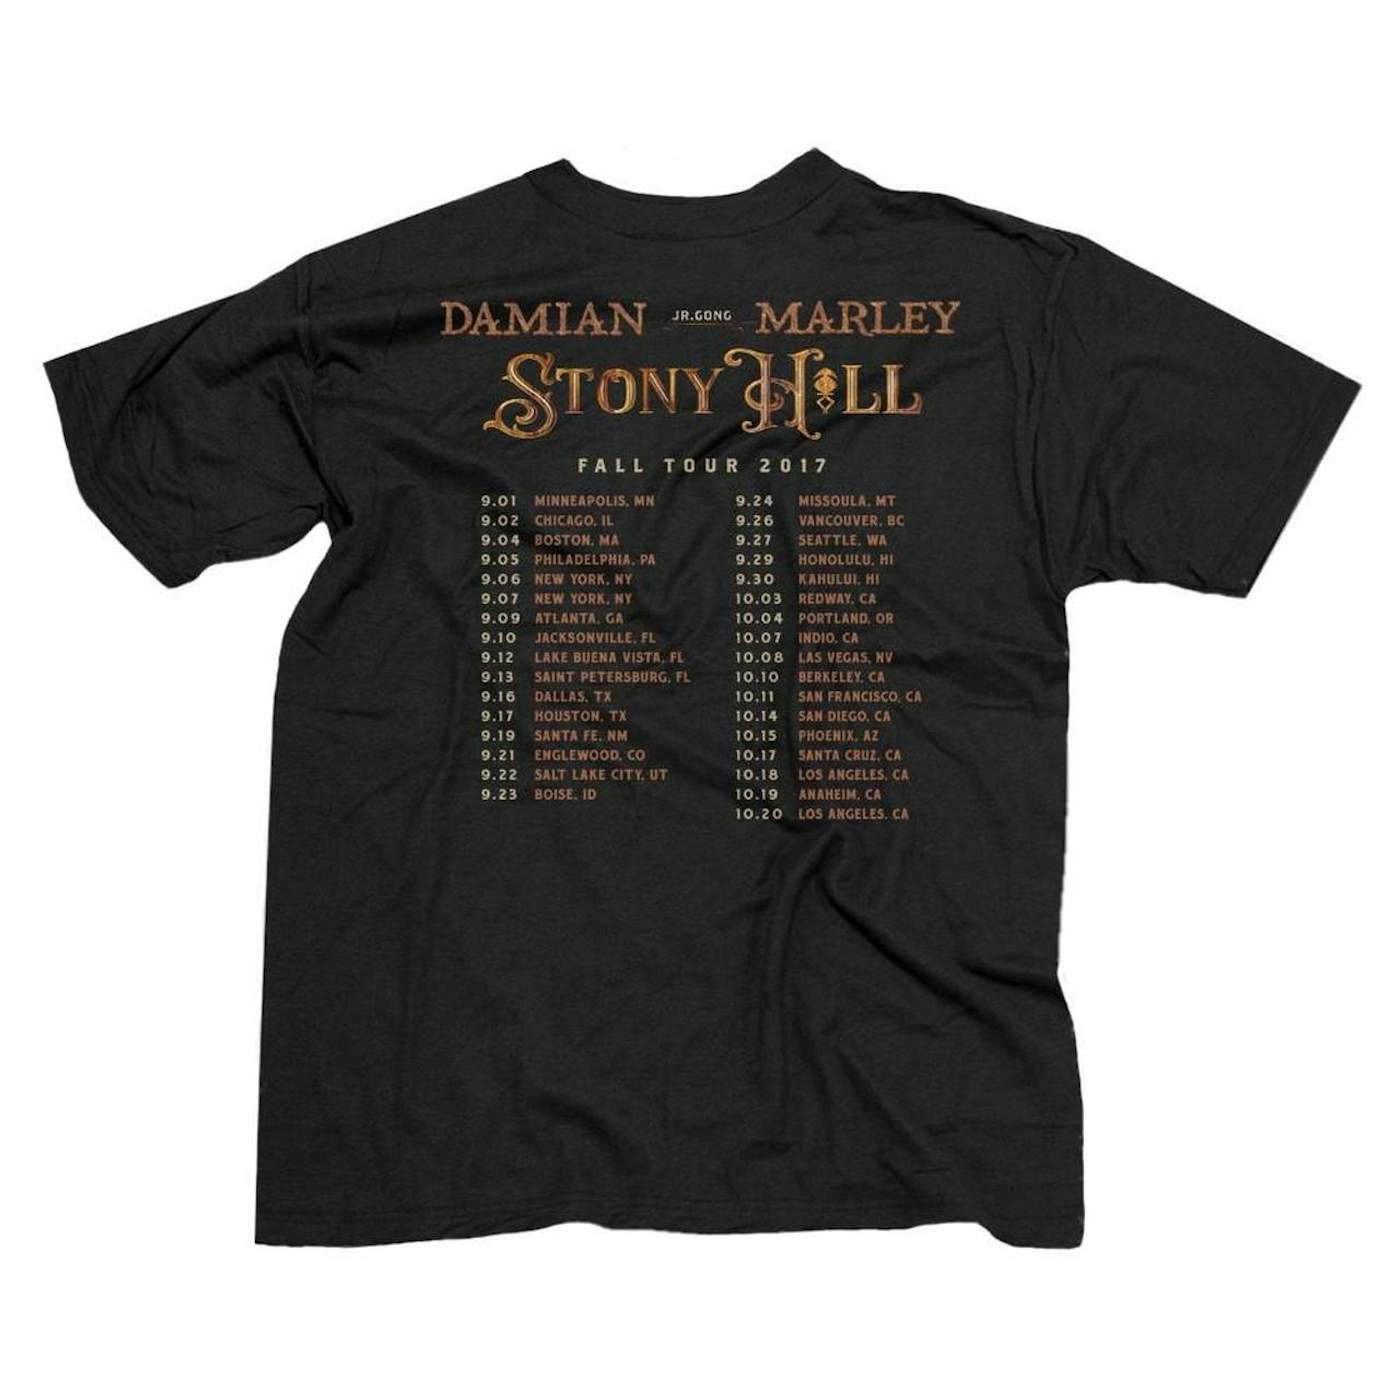 Damian Marley "Stony Hill" Tour men's t-shirt